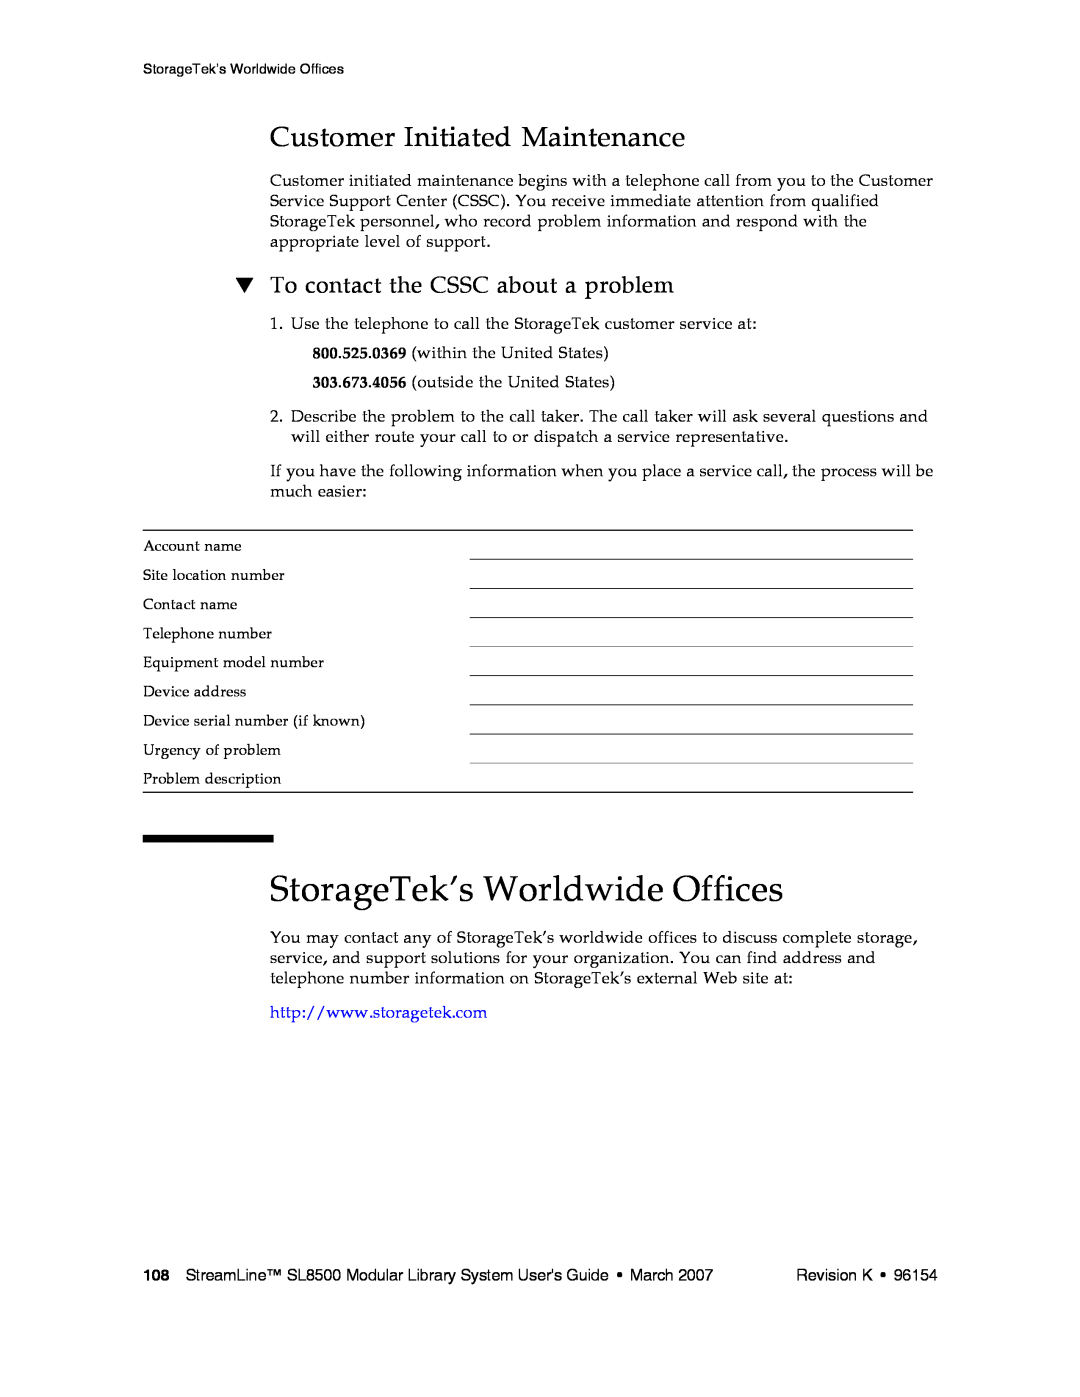 Sun Microsystems SL8500 manual StorageTek’s Worldwide Offices, Customer Initiated Maintenance 